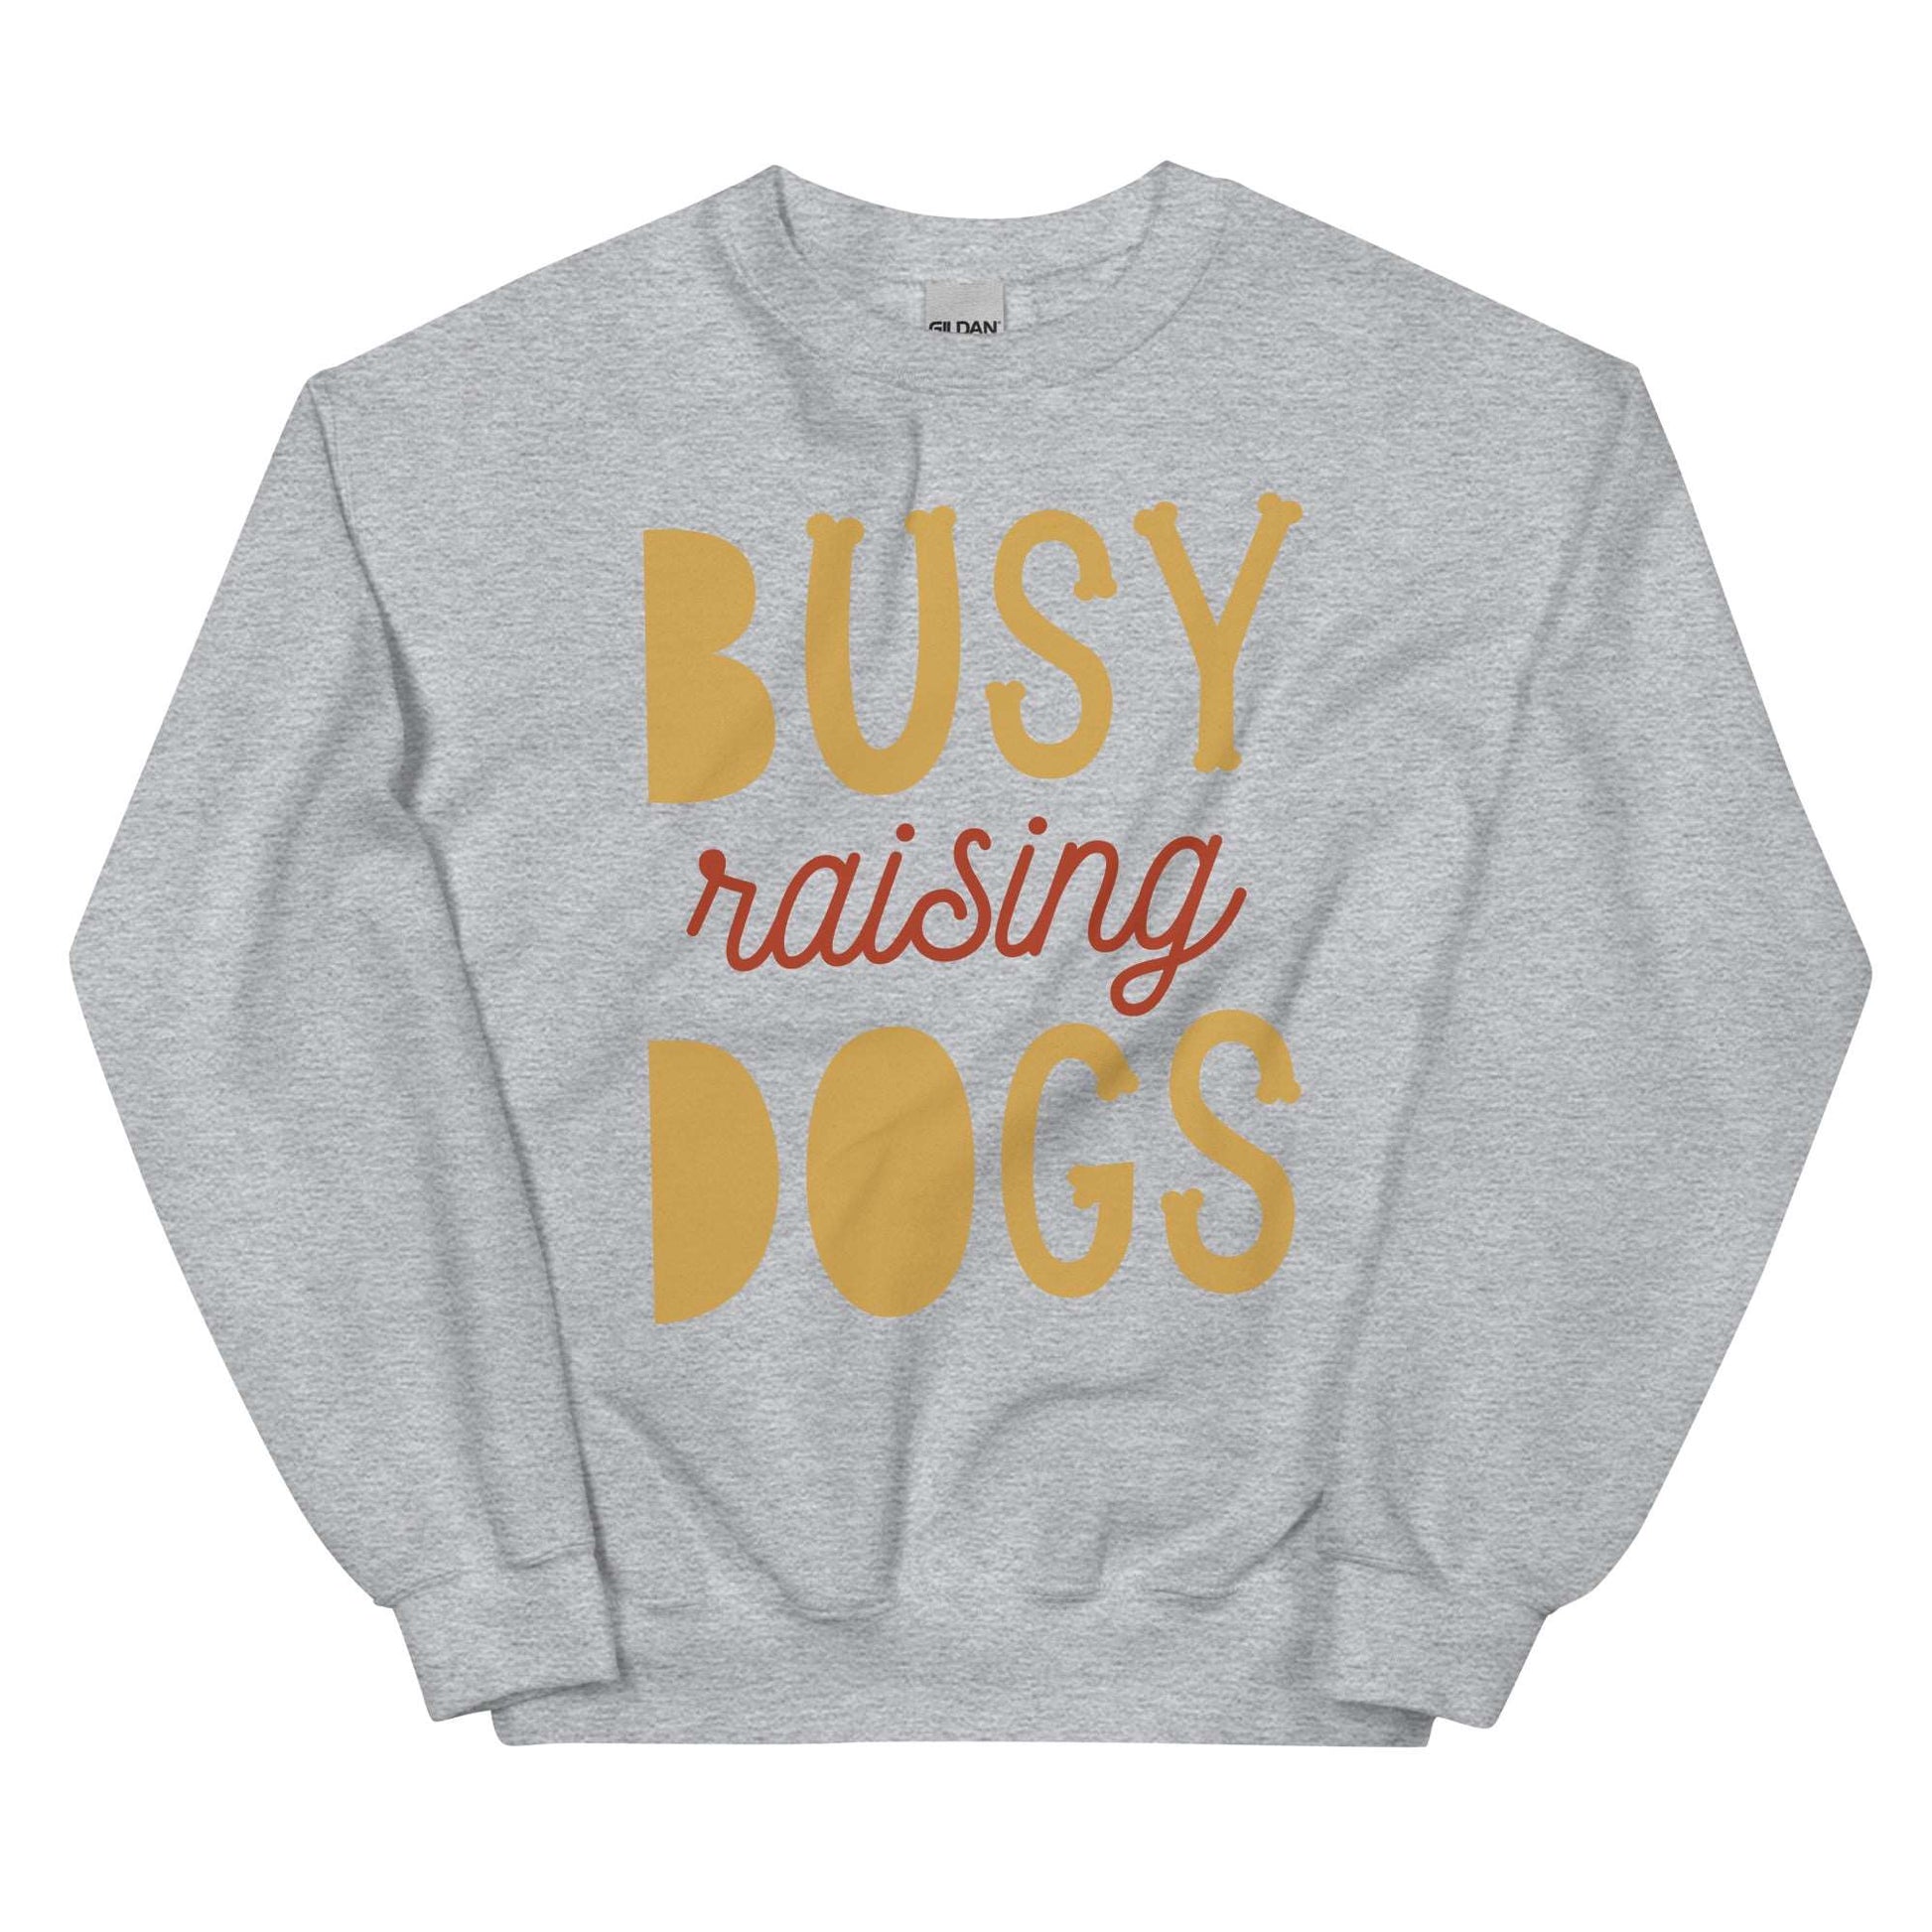 BUSY RAISING DOGS - Unisex Sweatshirt